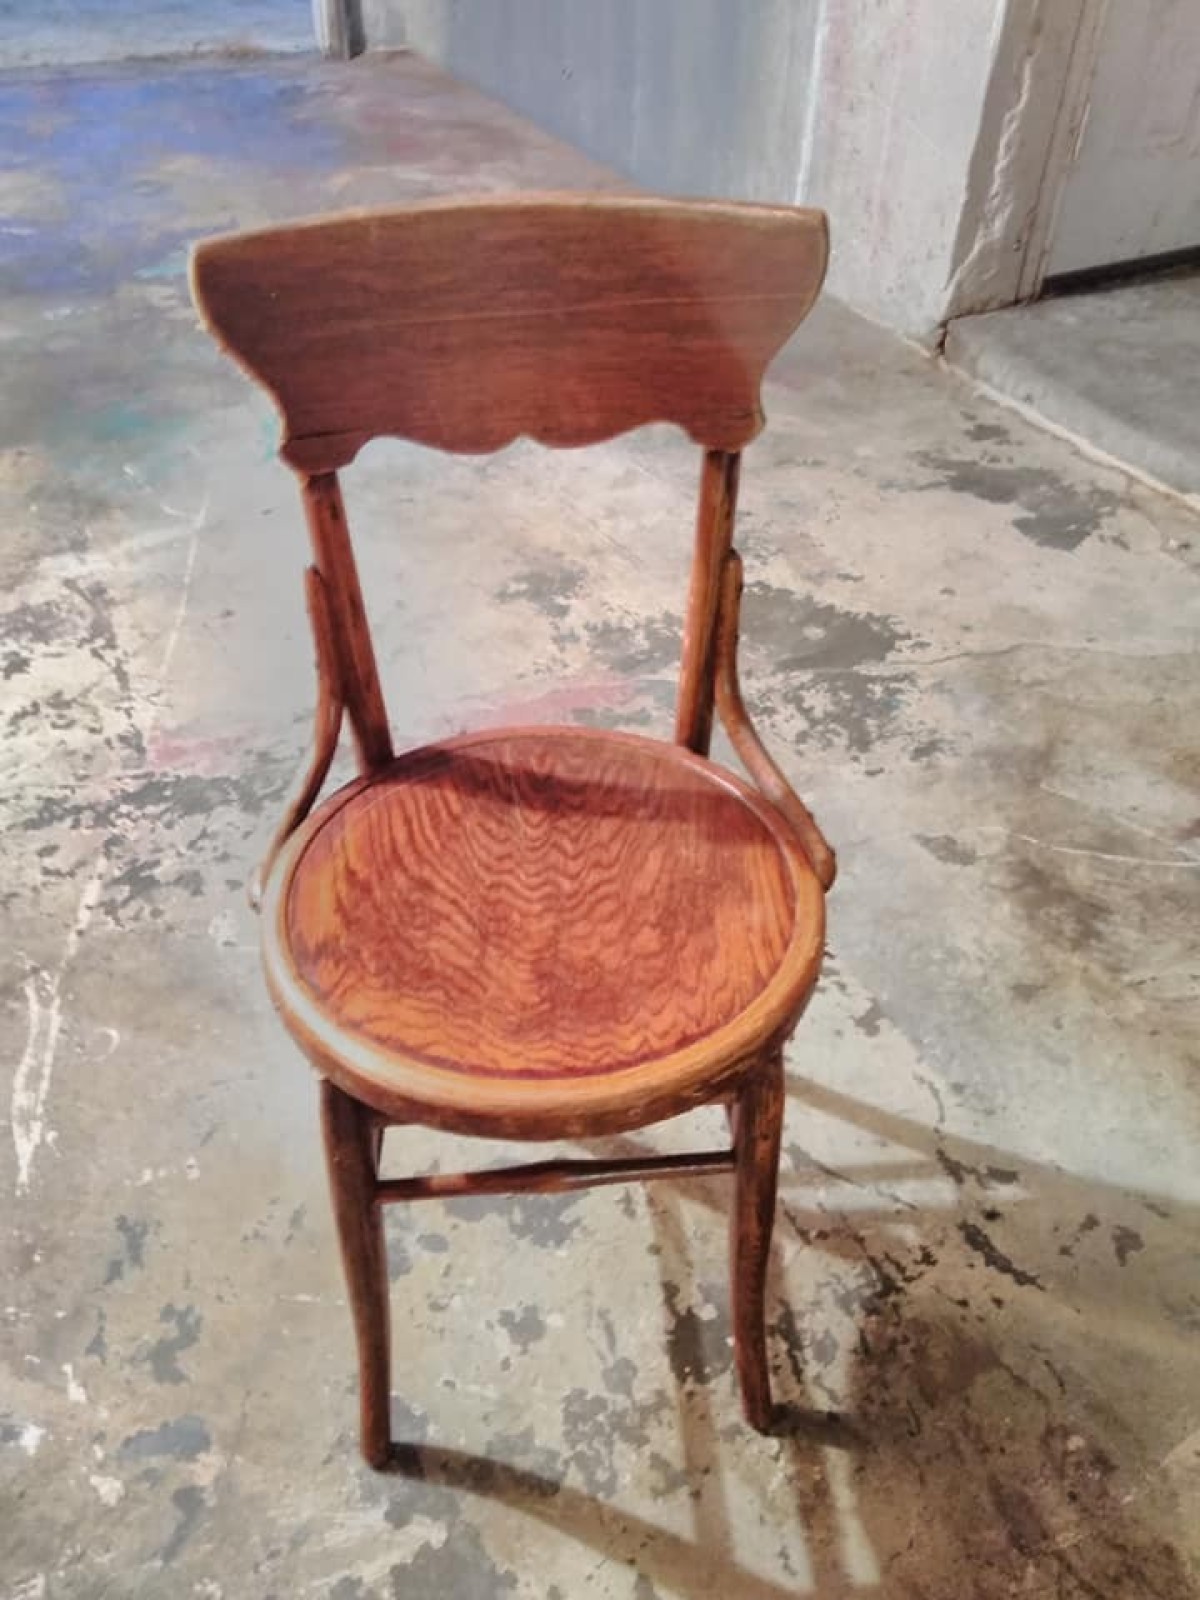 Identifying Antique Chairs? | ThriftyFun